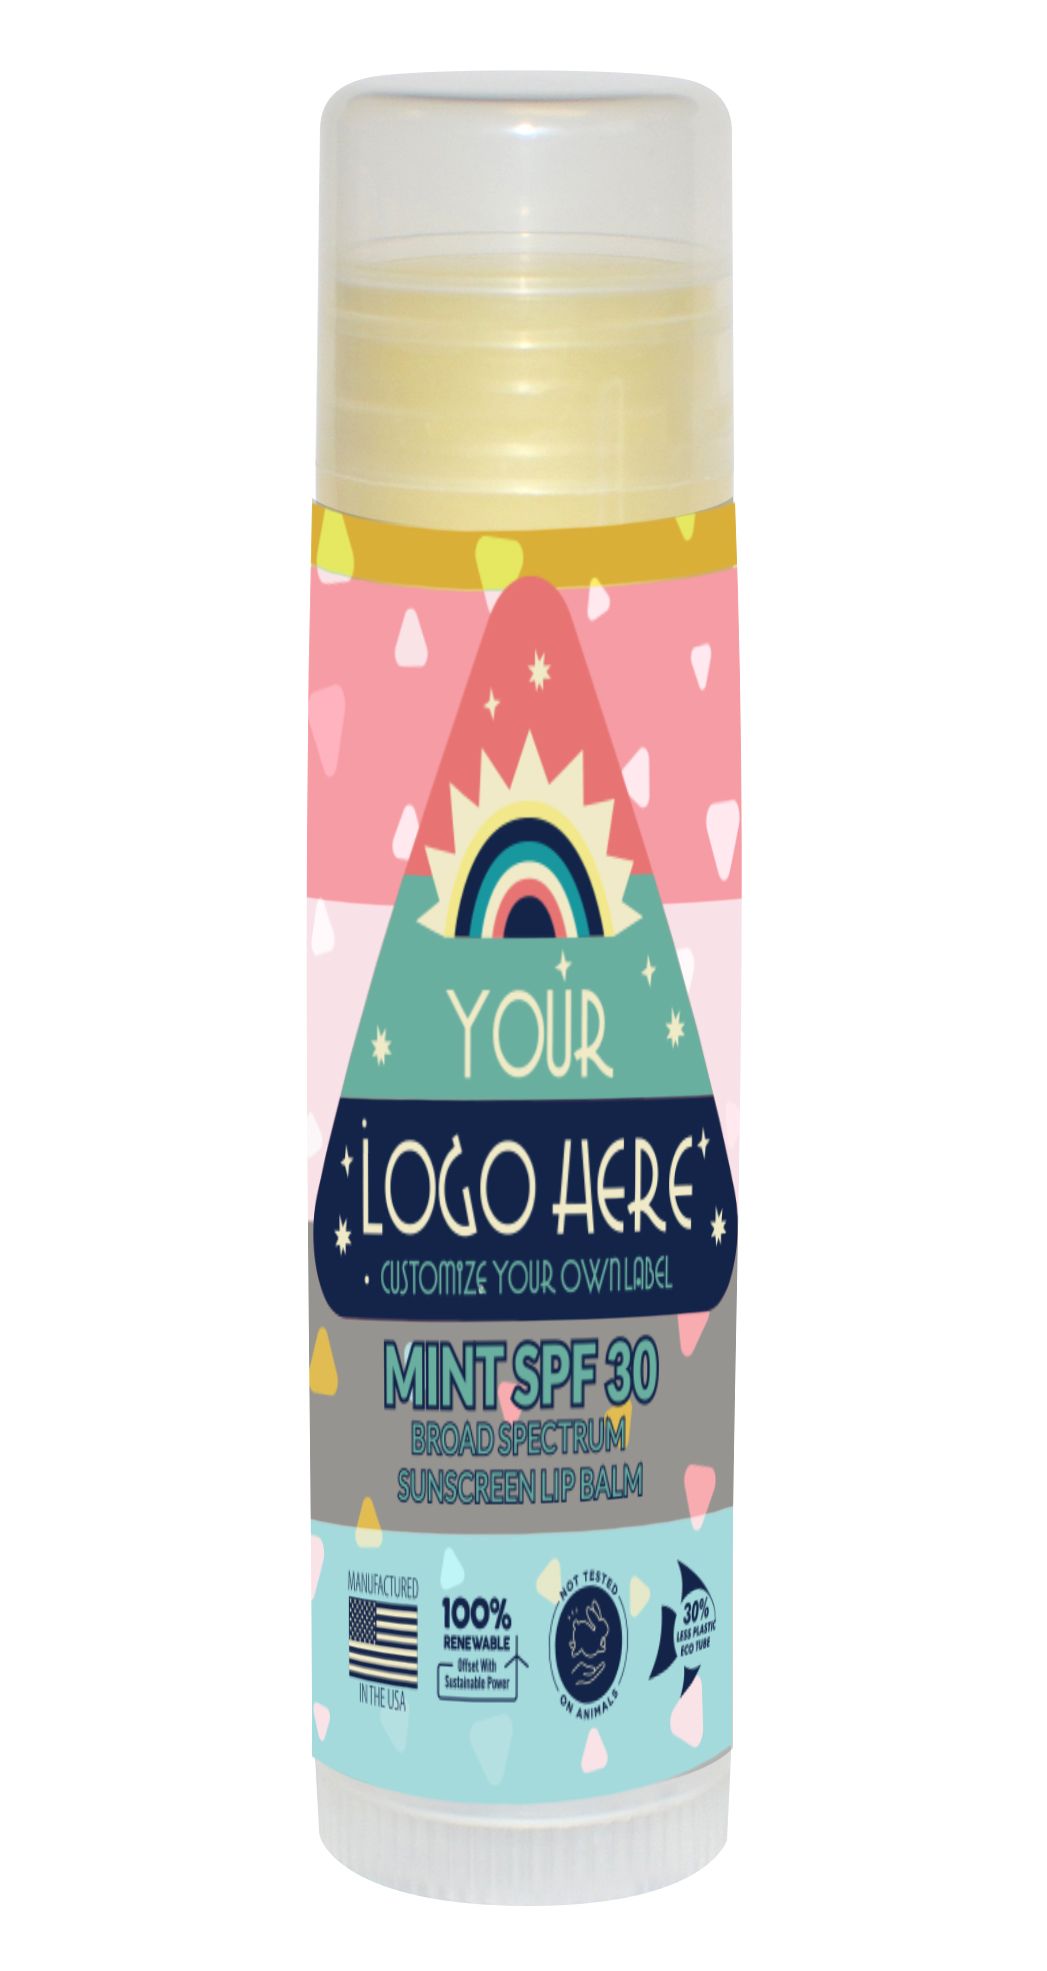 rainbow lip balm tube with "your logo here" 